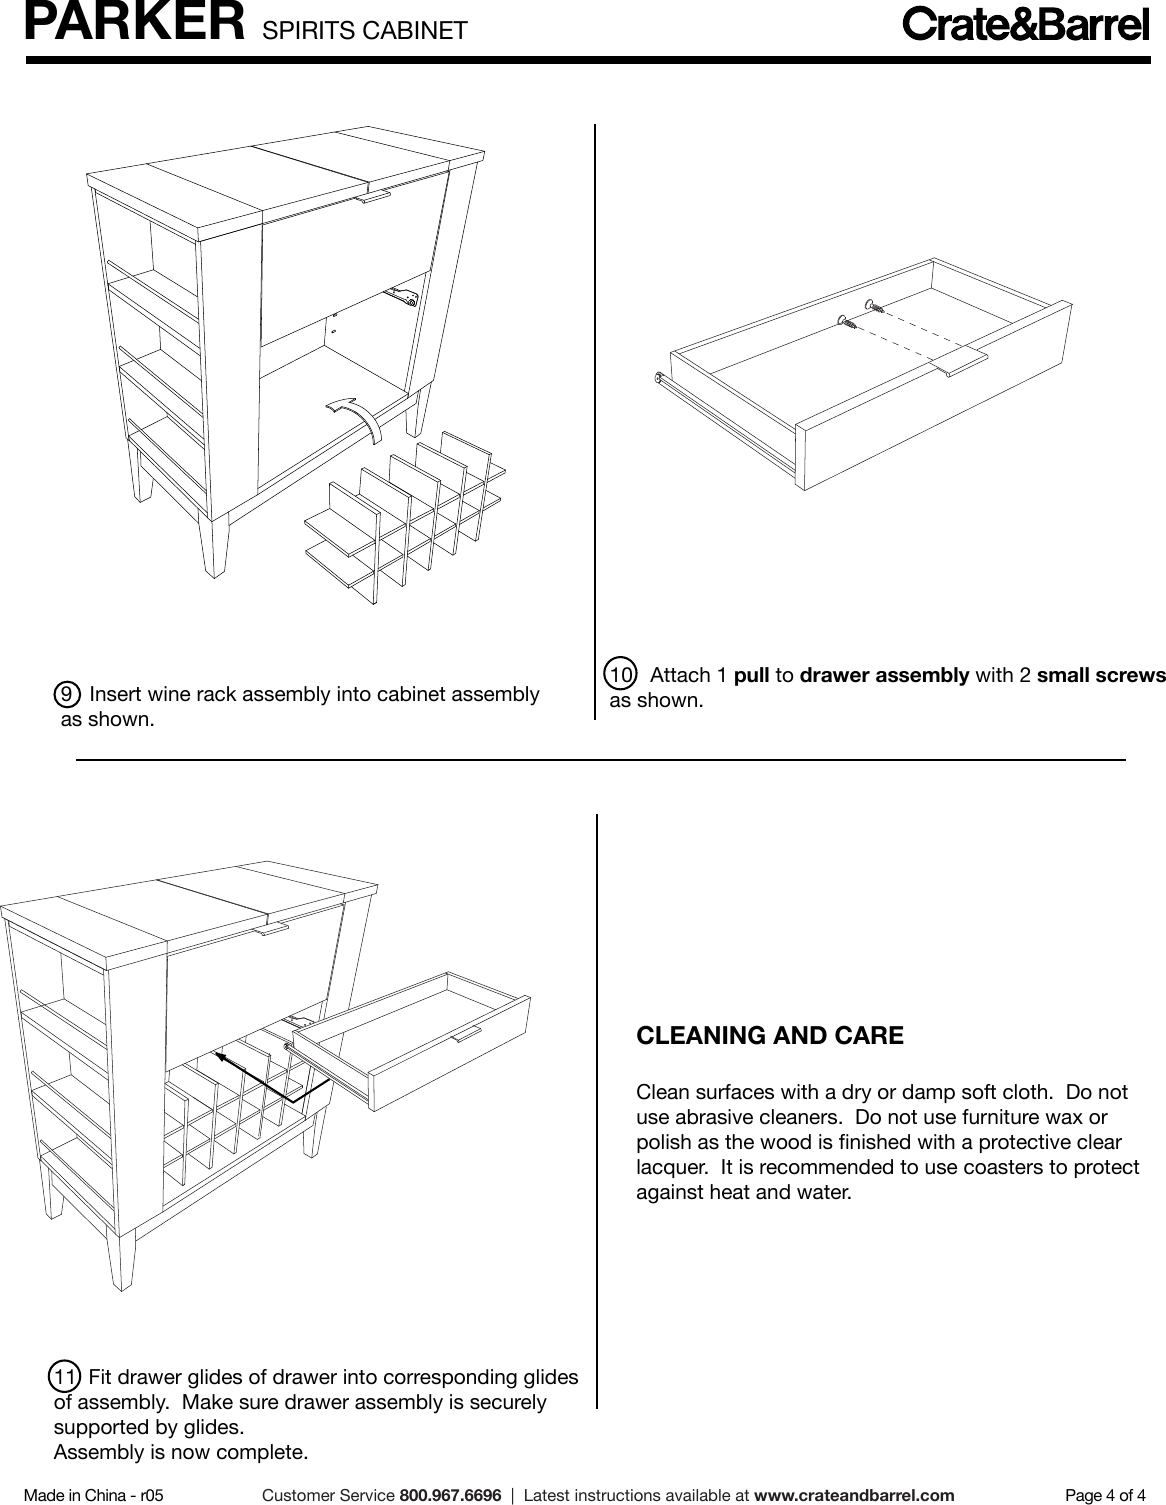 Page 4 of 4 - Crate-Barrel 760-Parker-Spirits-Cabinet